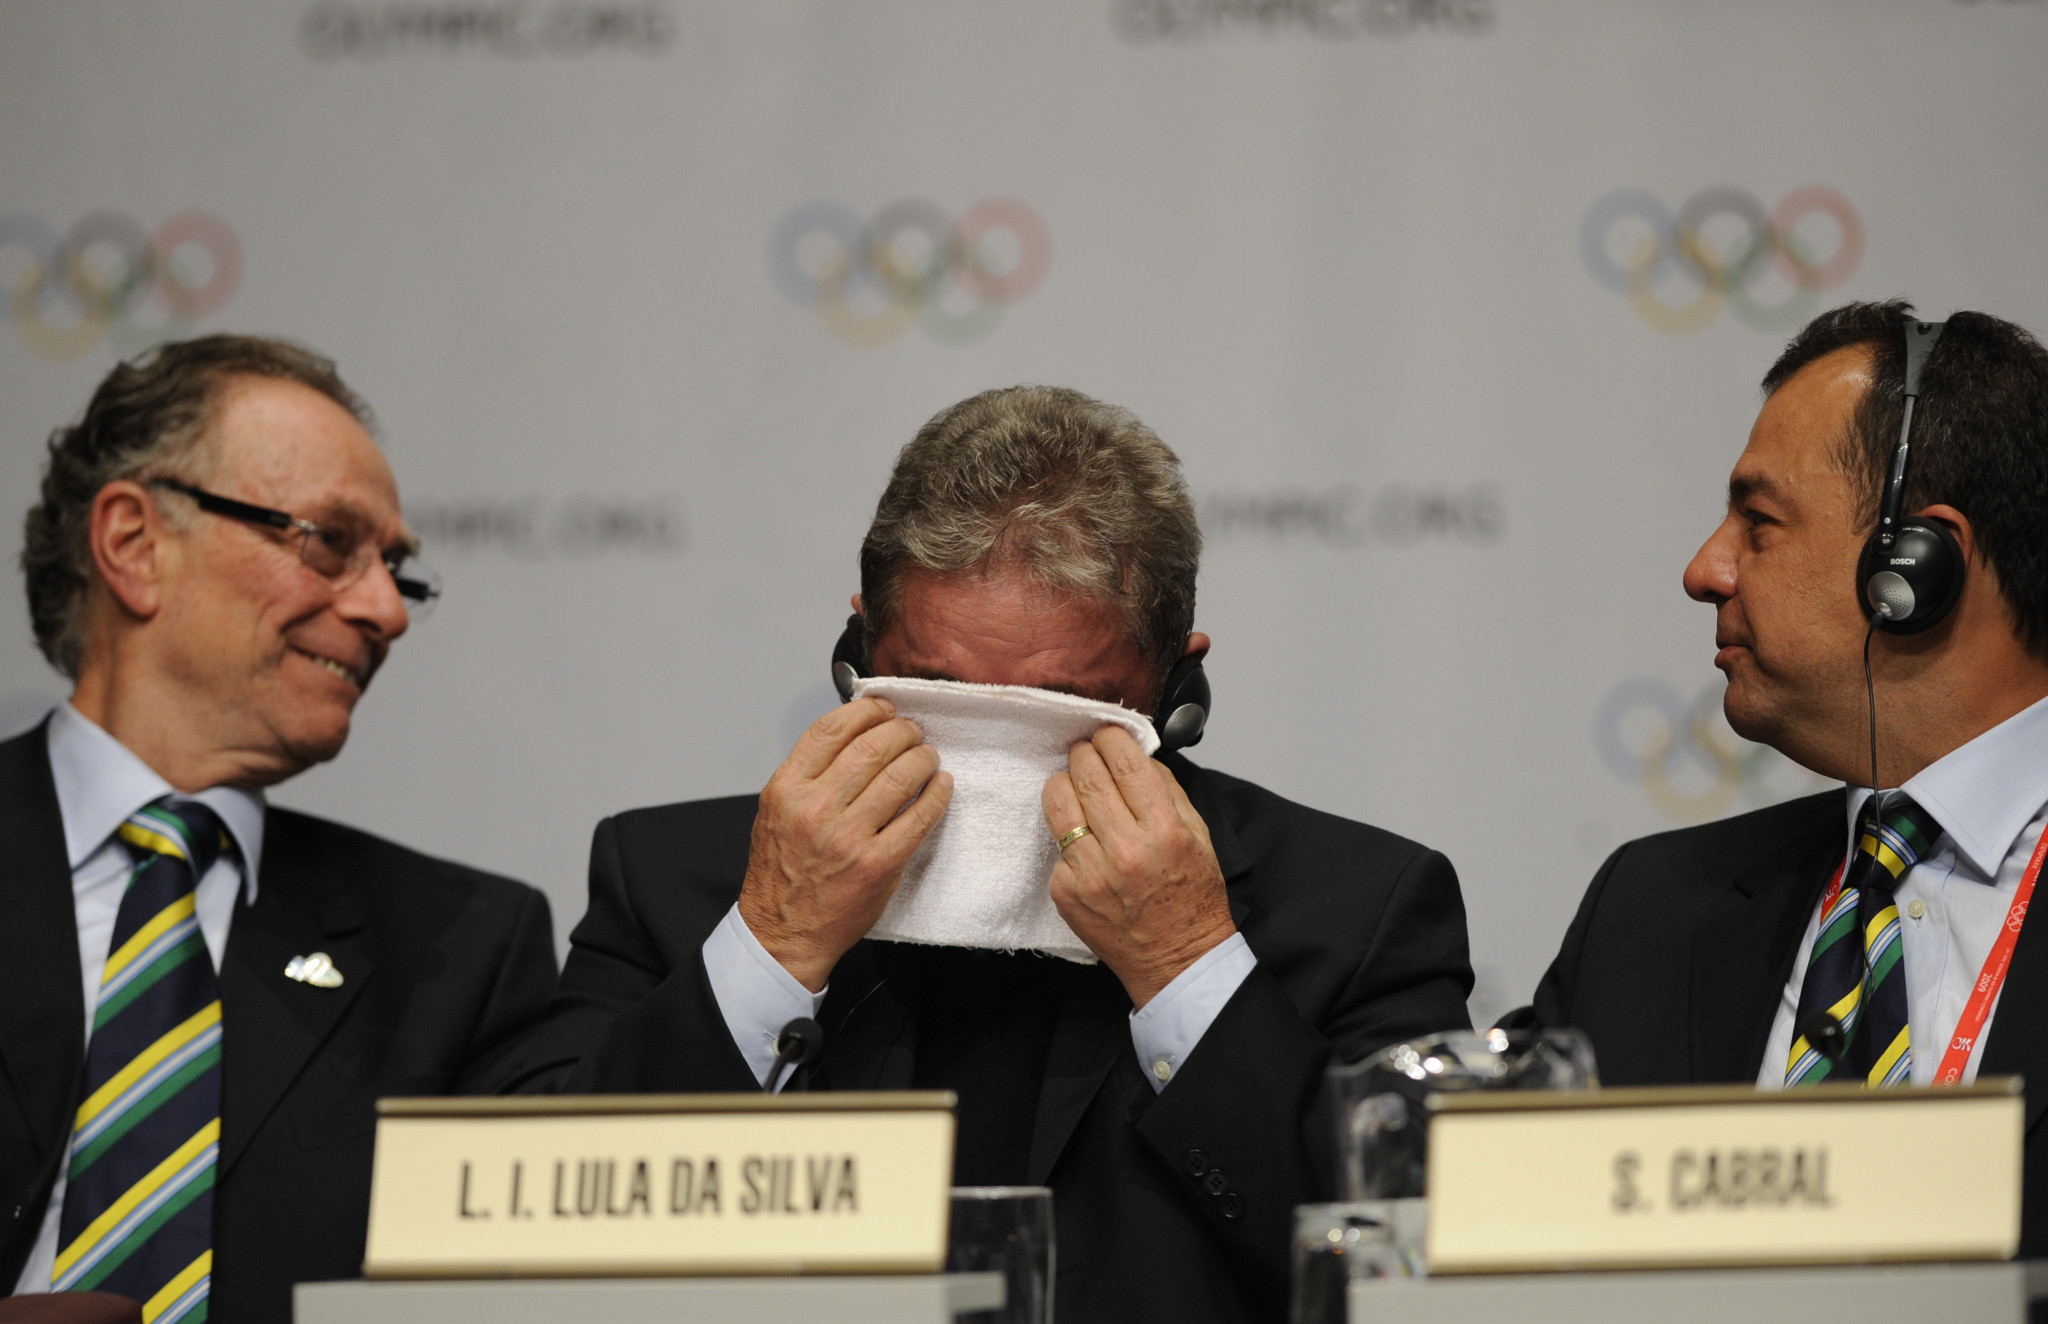 Luiz Inacio Lula da Silva, centre, pictured in between Carlos Nuzman, left, and Sérgio Cabral during the IOC Session in Copenhagen where Rio were awarded the Games ©Getty Images